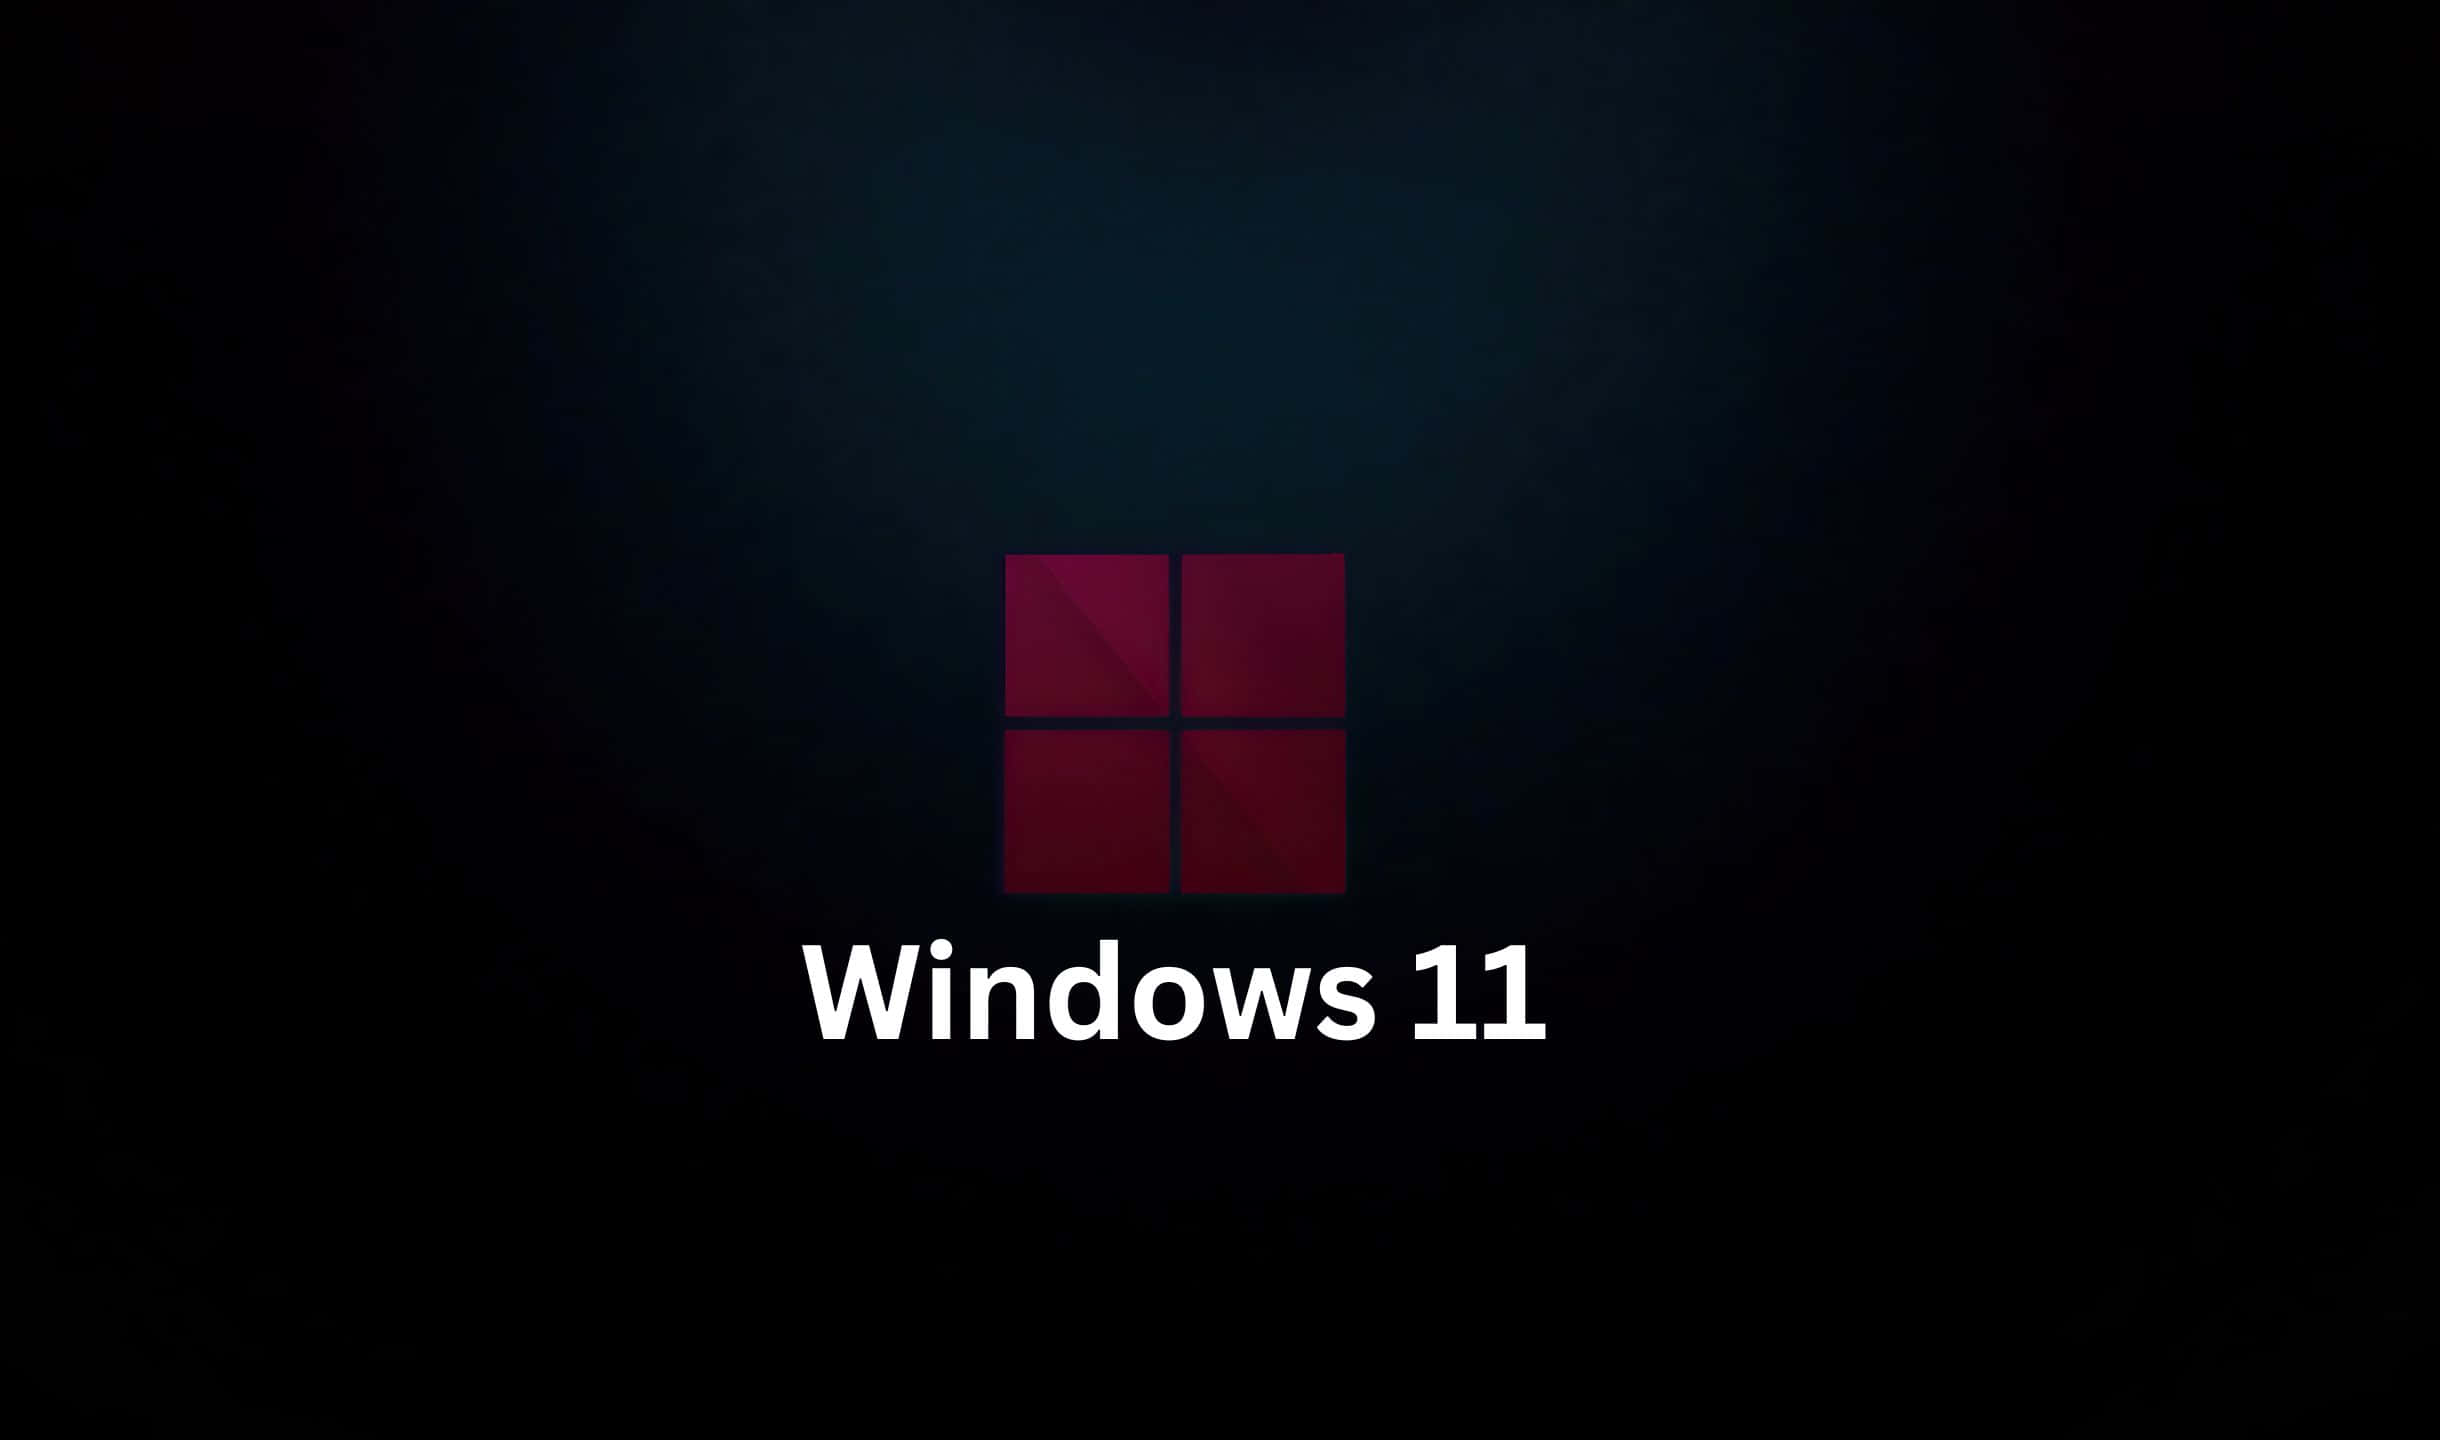 Descubrao Novo Visual Do Windows 11